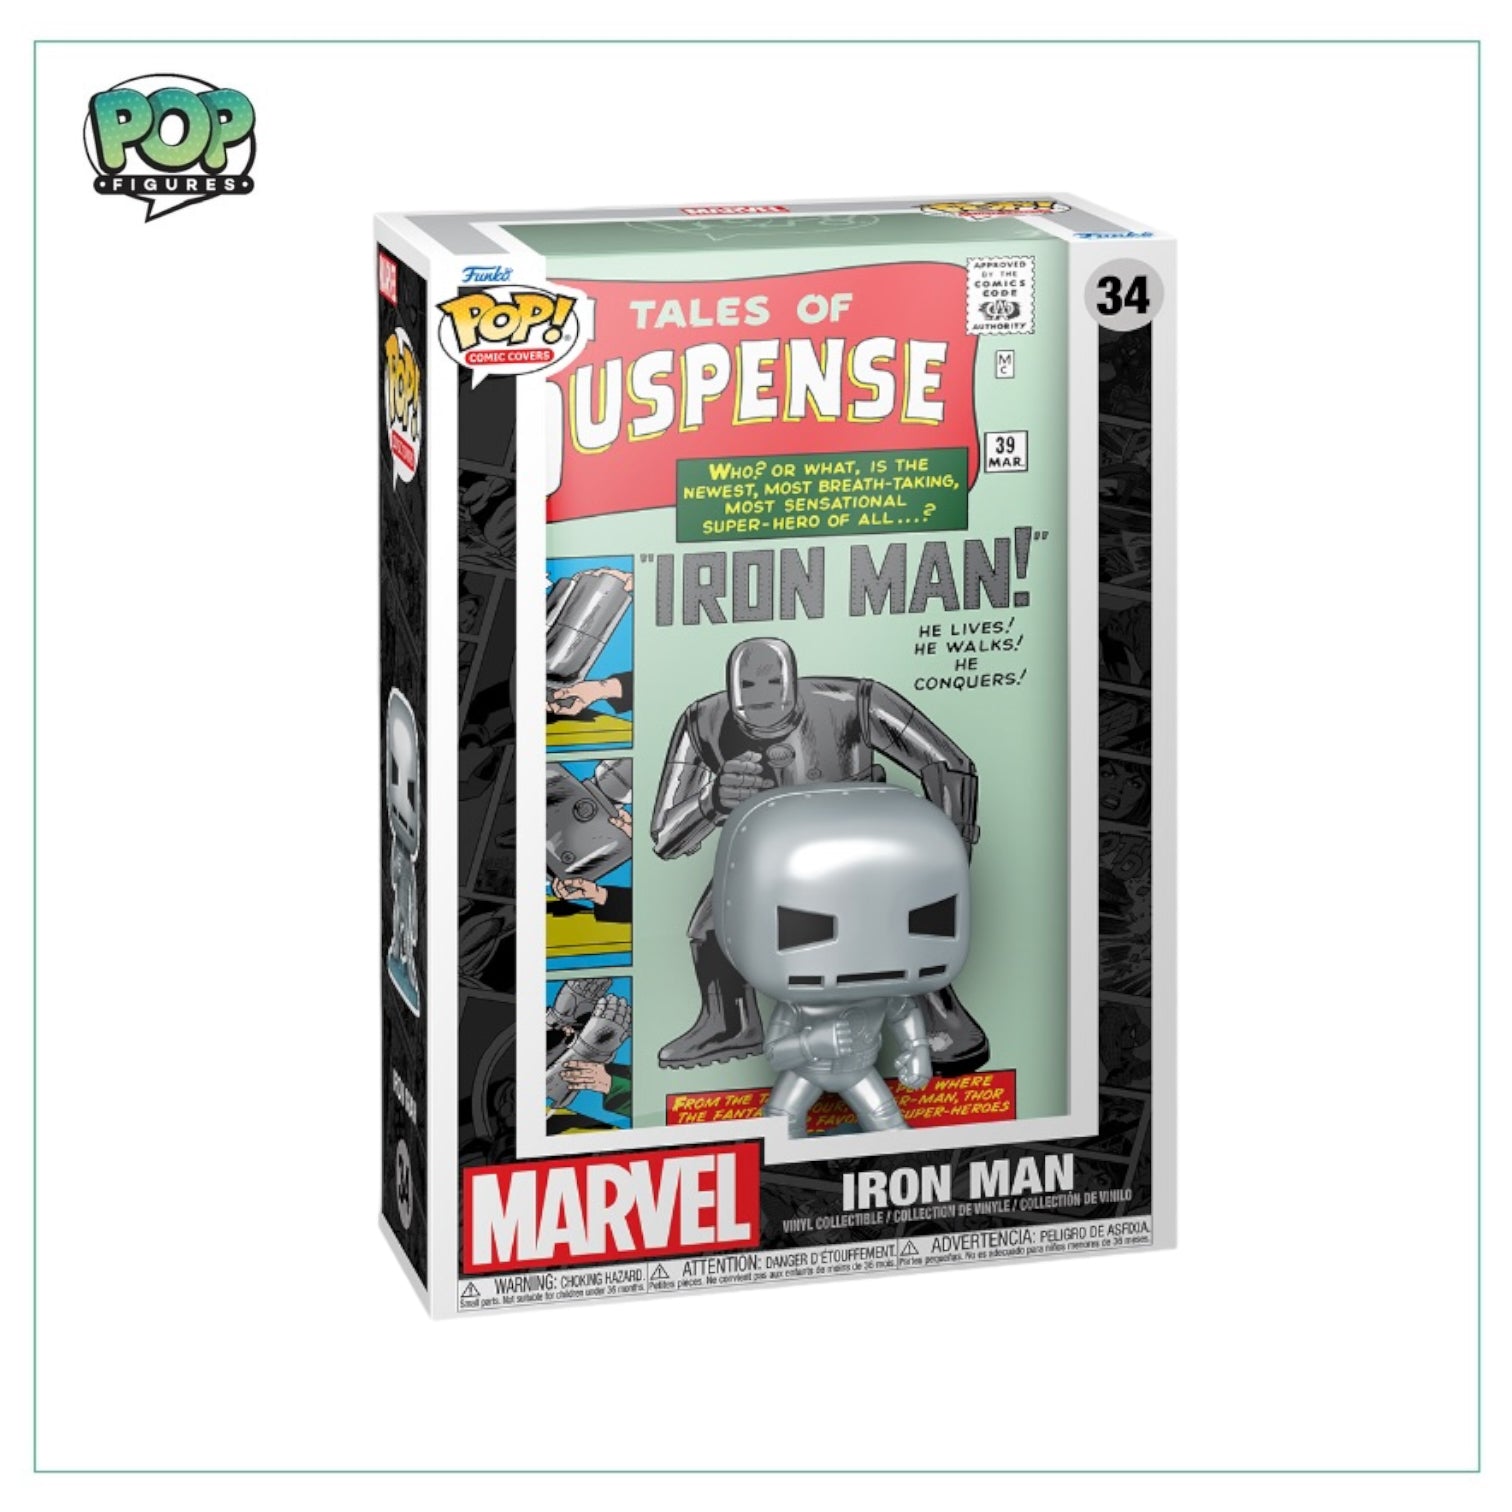 Iron Man #39 Funko Comic Cover Pop! - Tales of Suspense